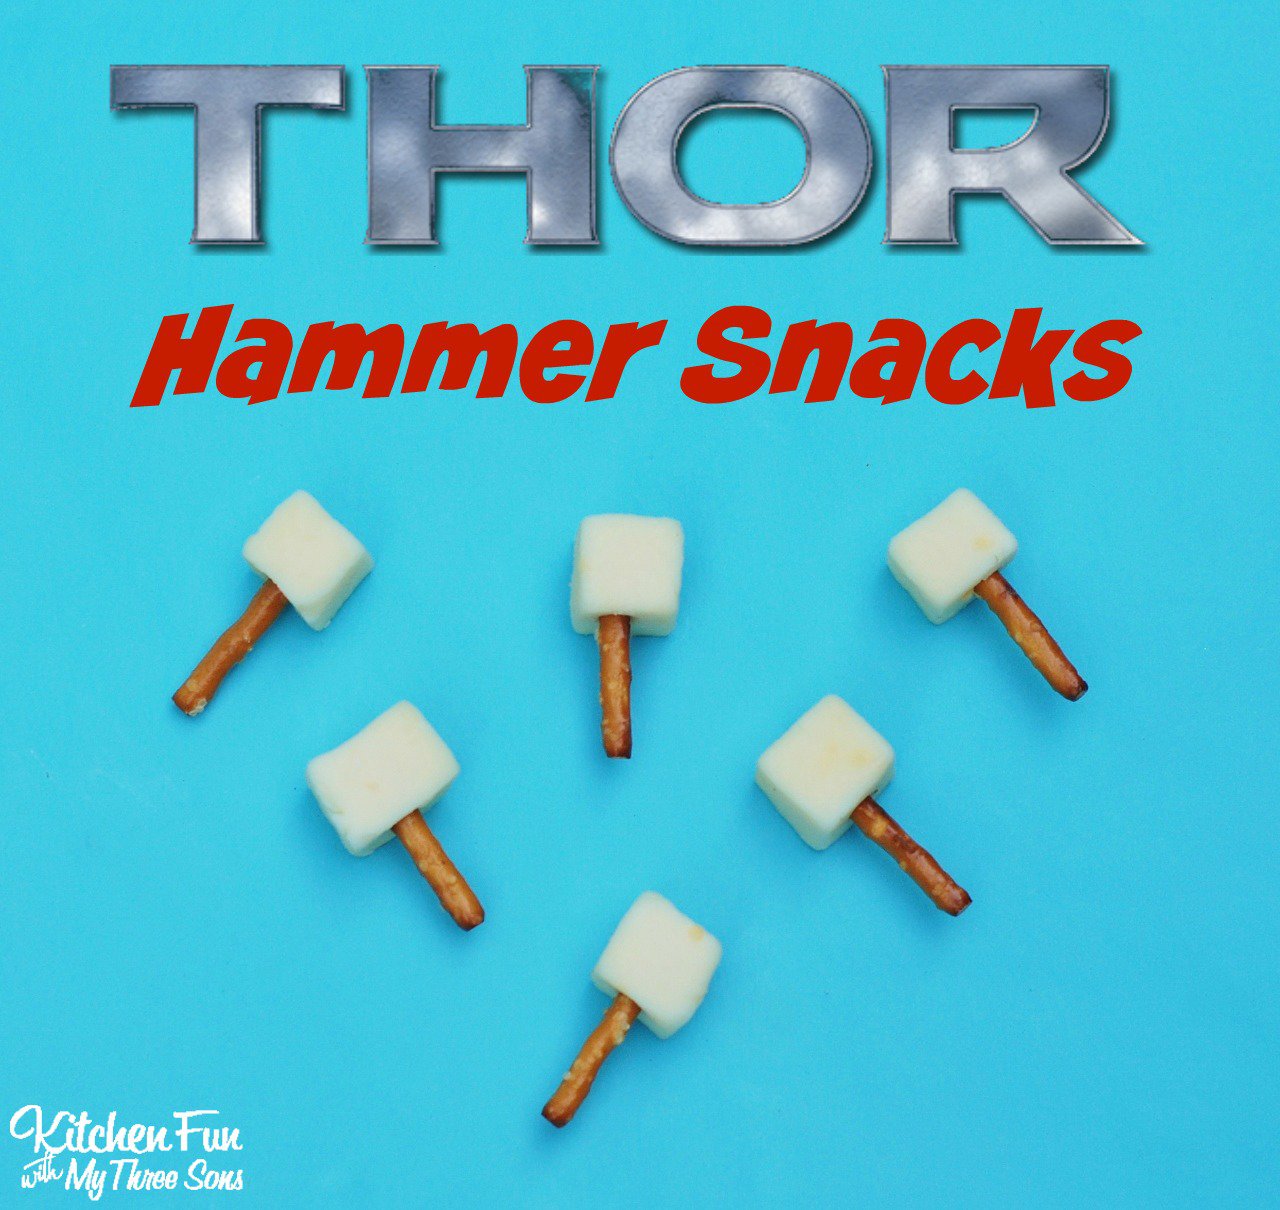 Thor Hammer Snacks